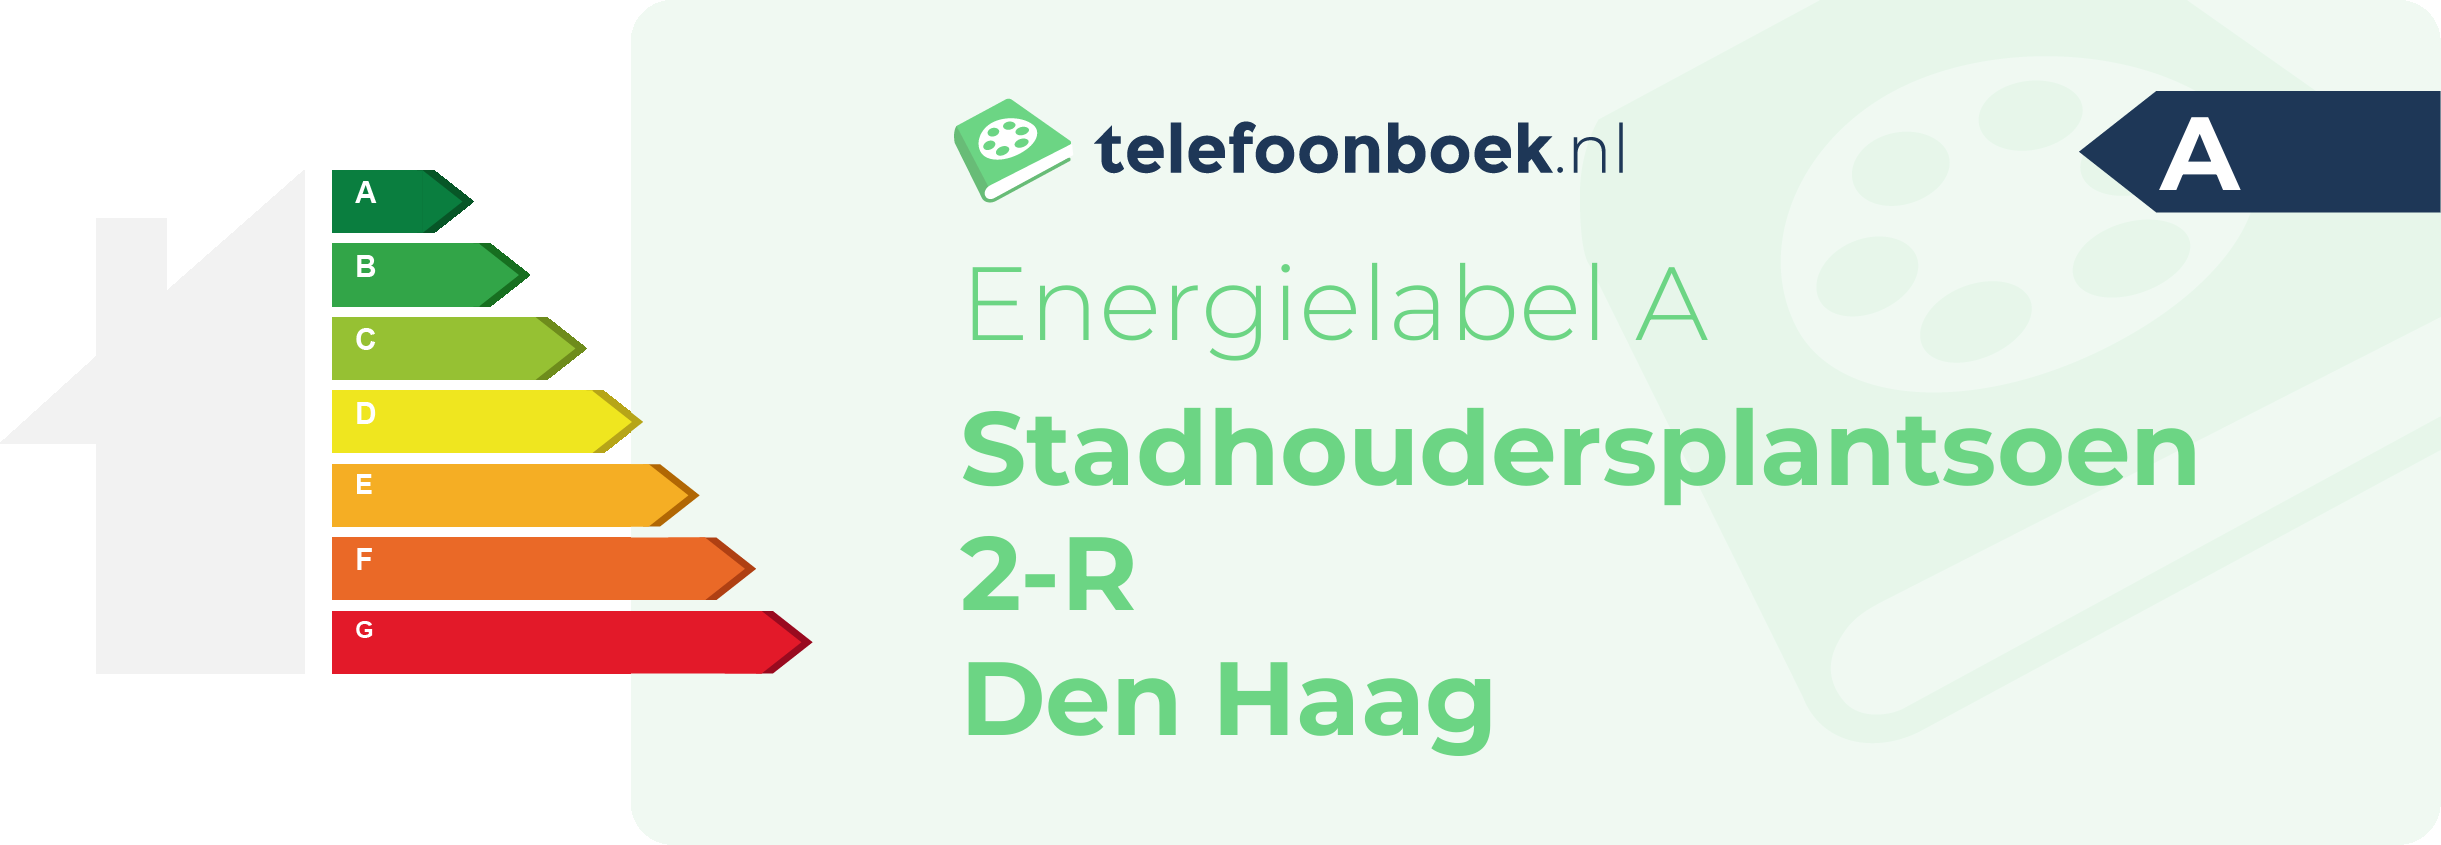 Energielabel Stadhoudersplantsoen 2-R Den Haag